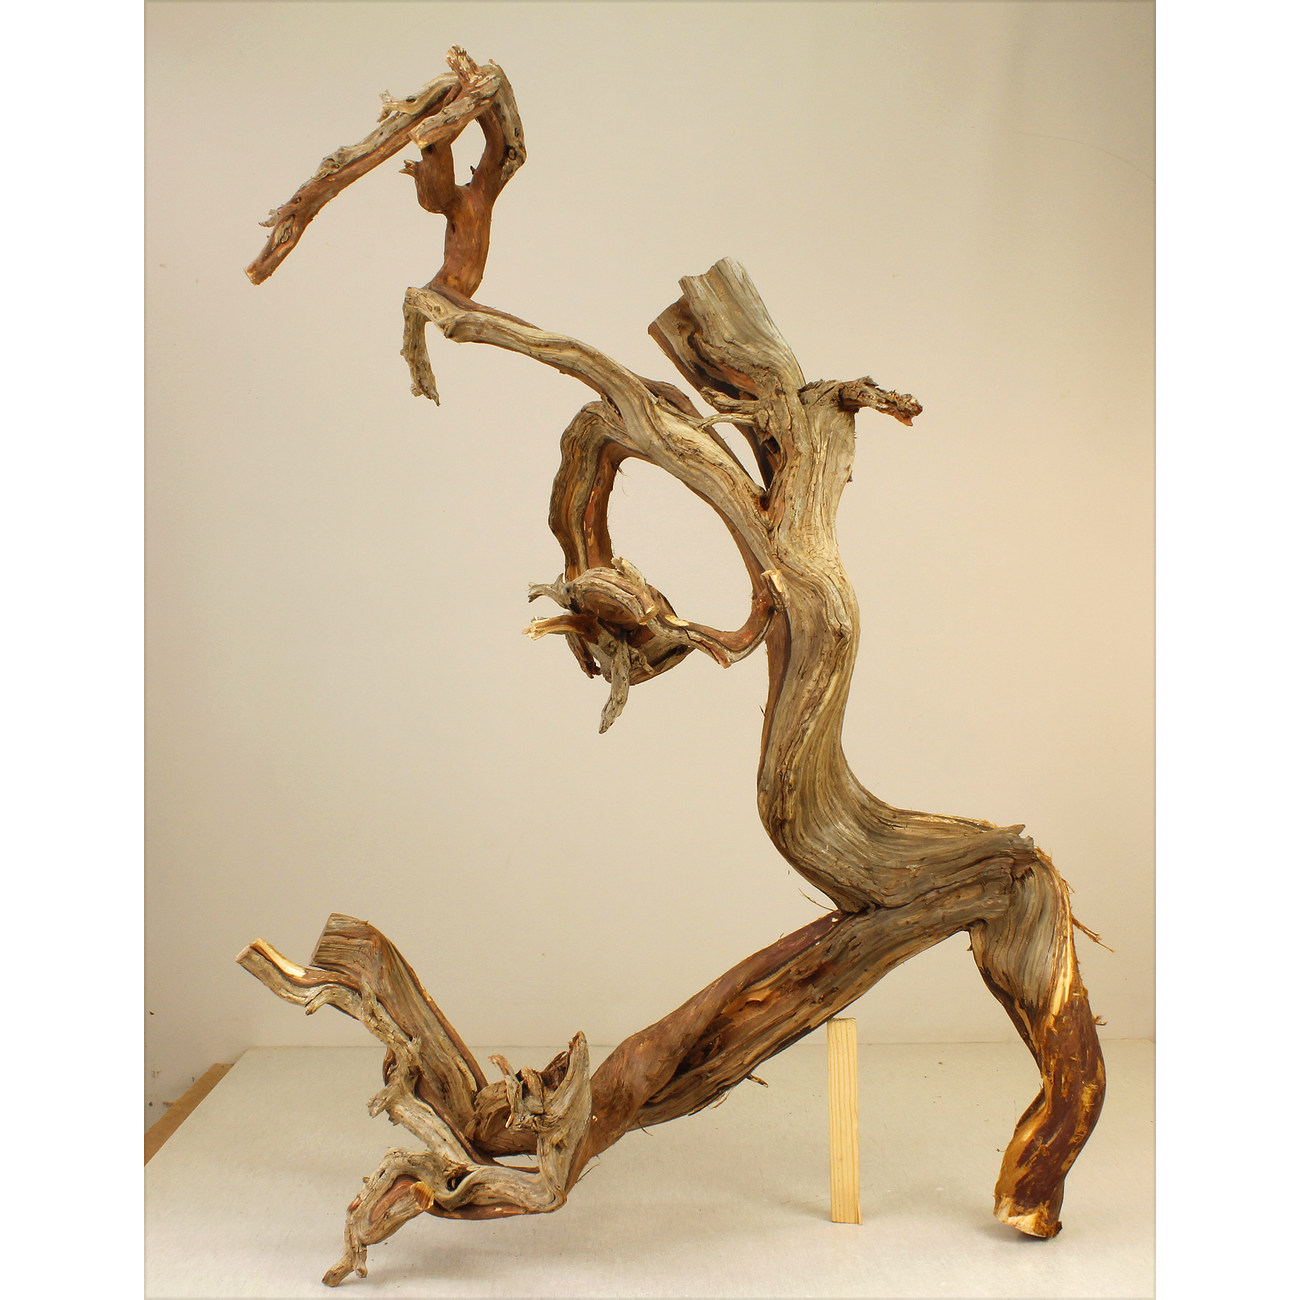 Wood for tanuki bonsai 13